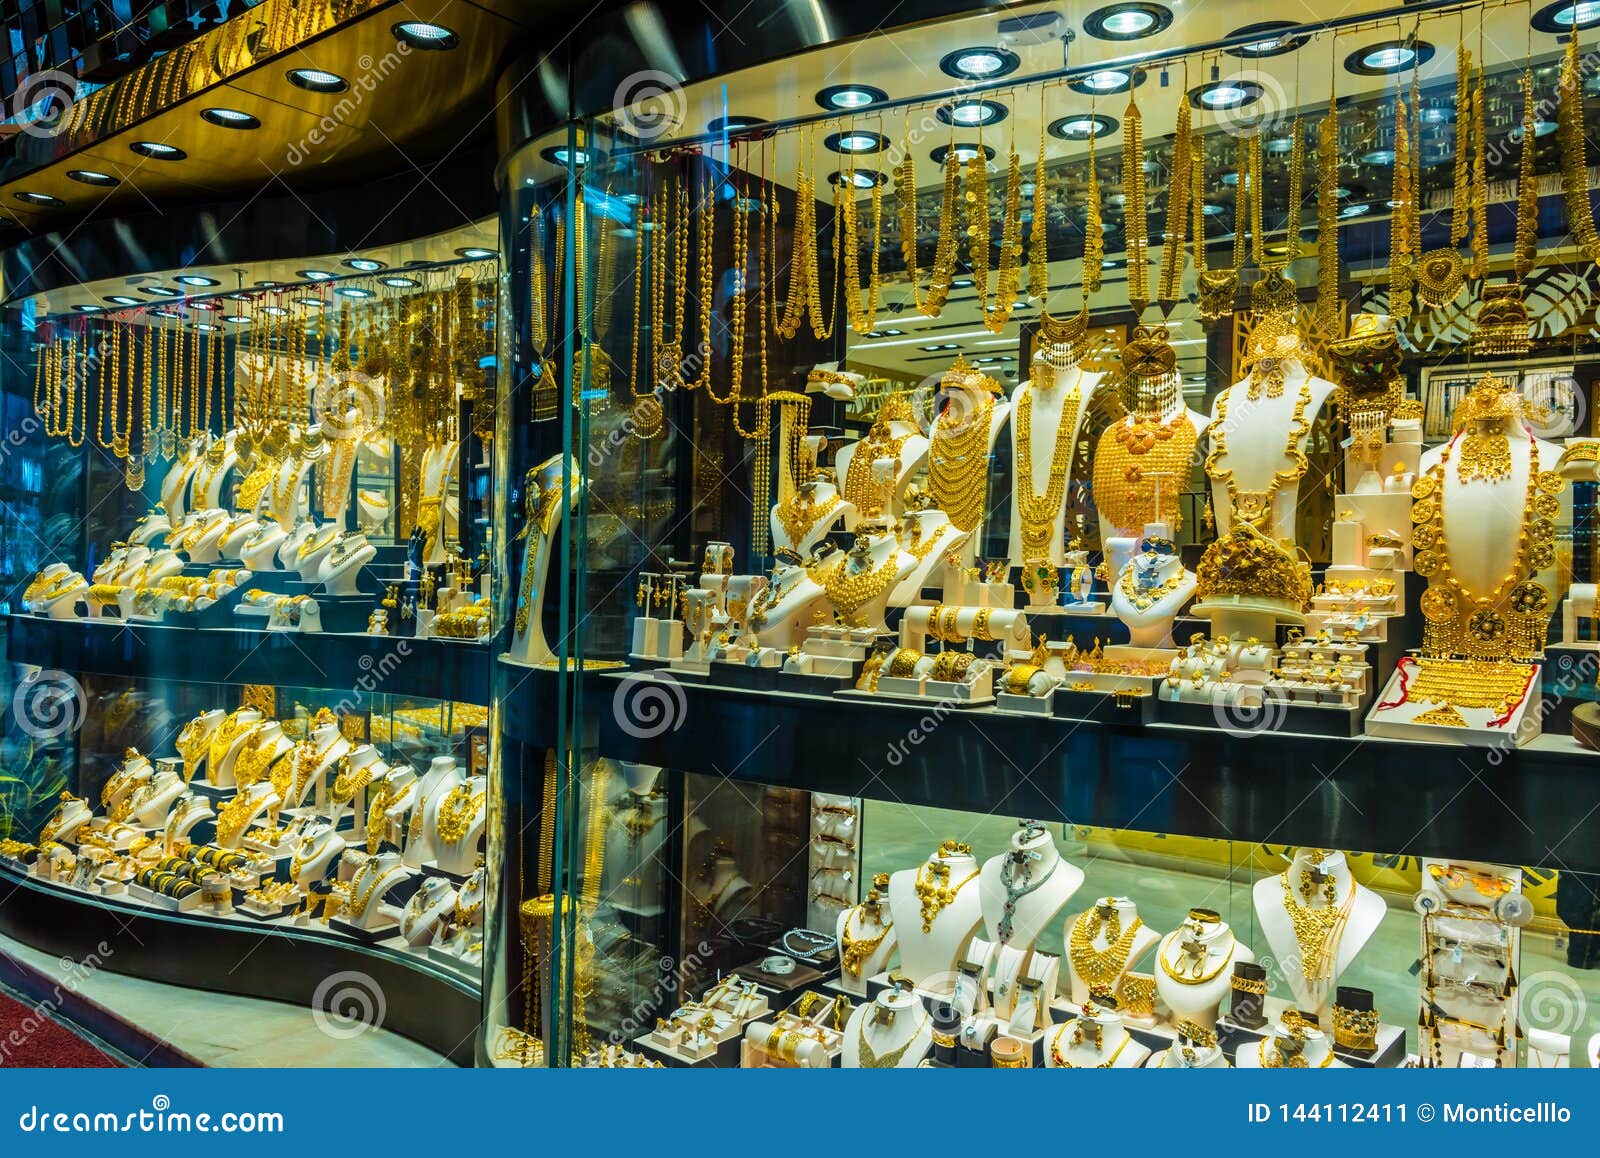 dubai arabic stores in denver